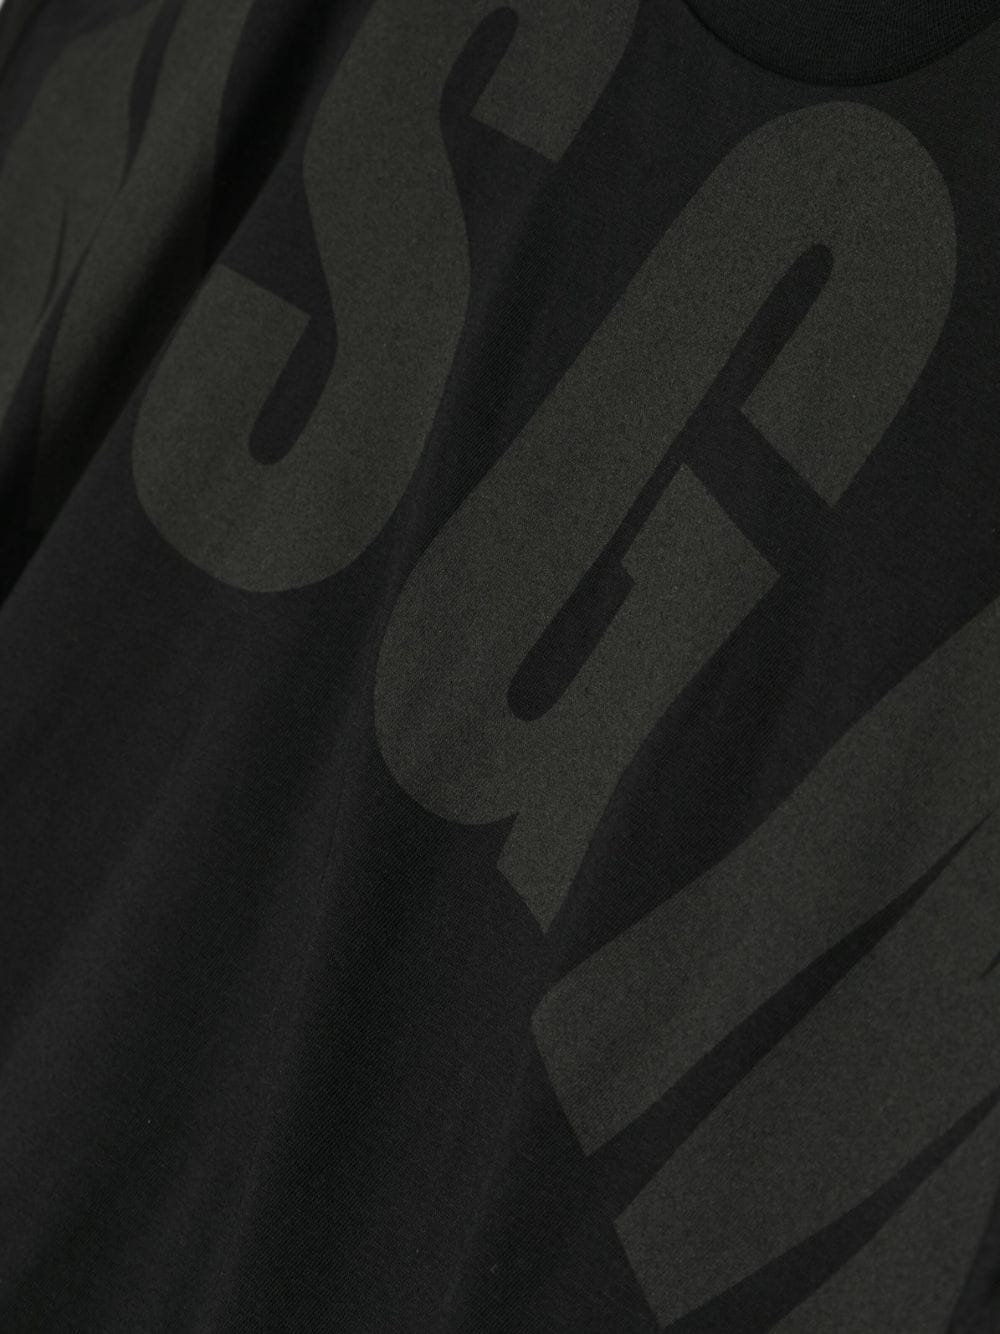 Black cotton jersey boy MSGM t-shirt | Carofiglio Junior